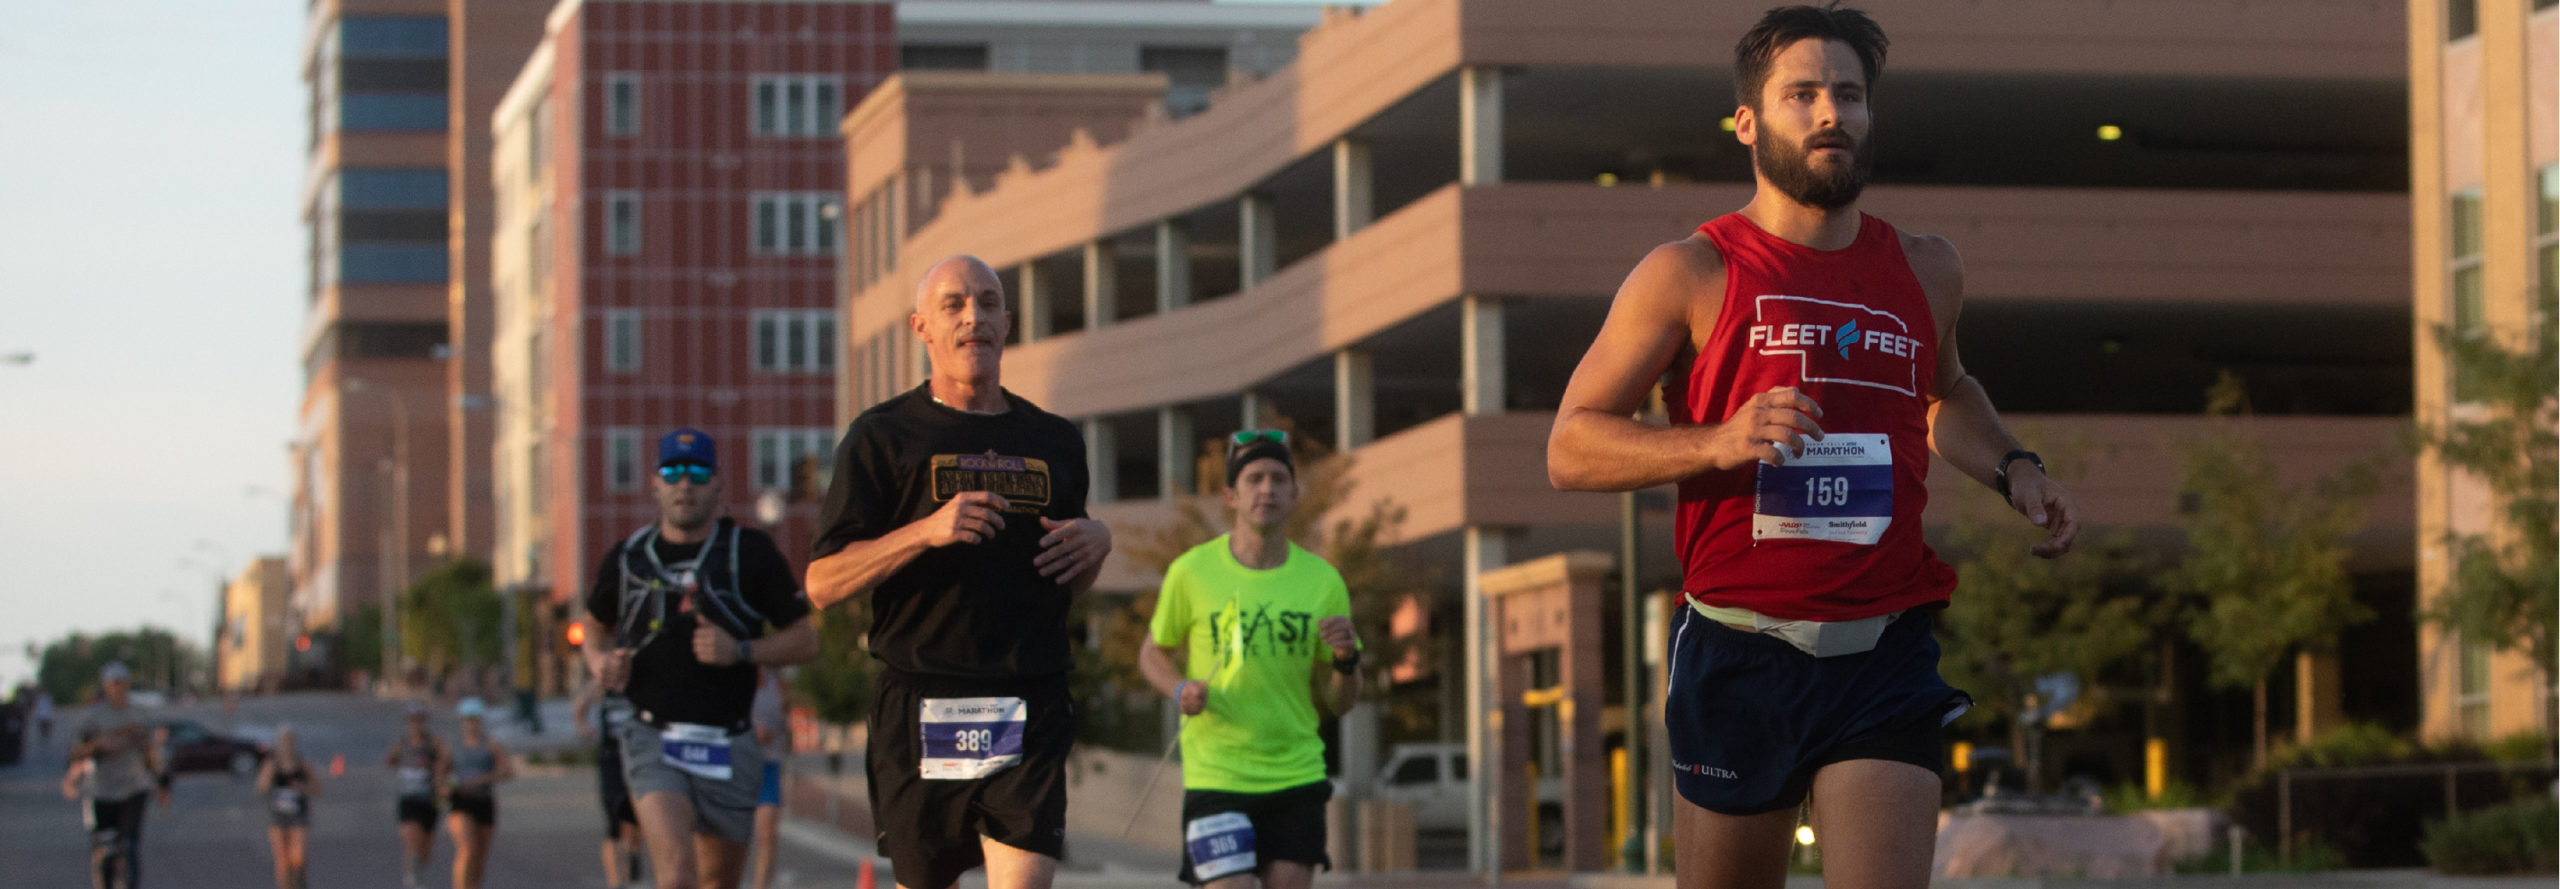 Runners in Sioux Falls Marathon